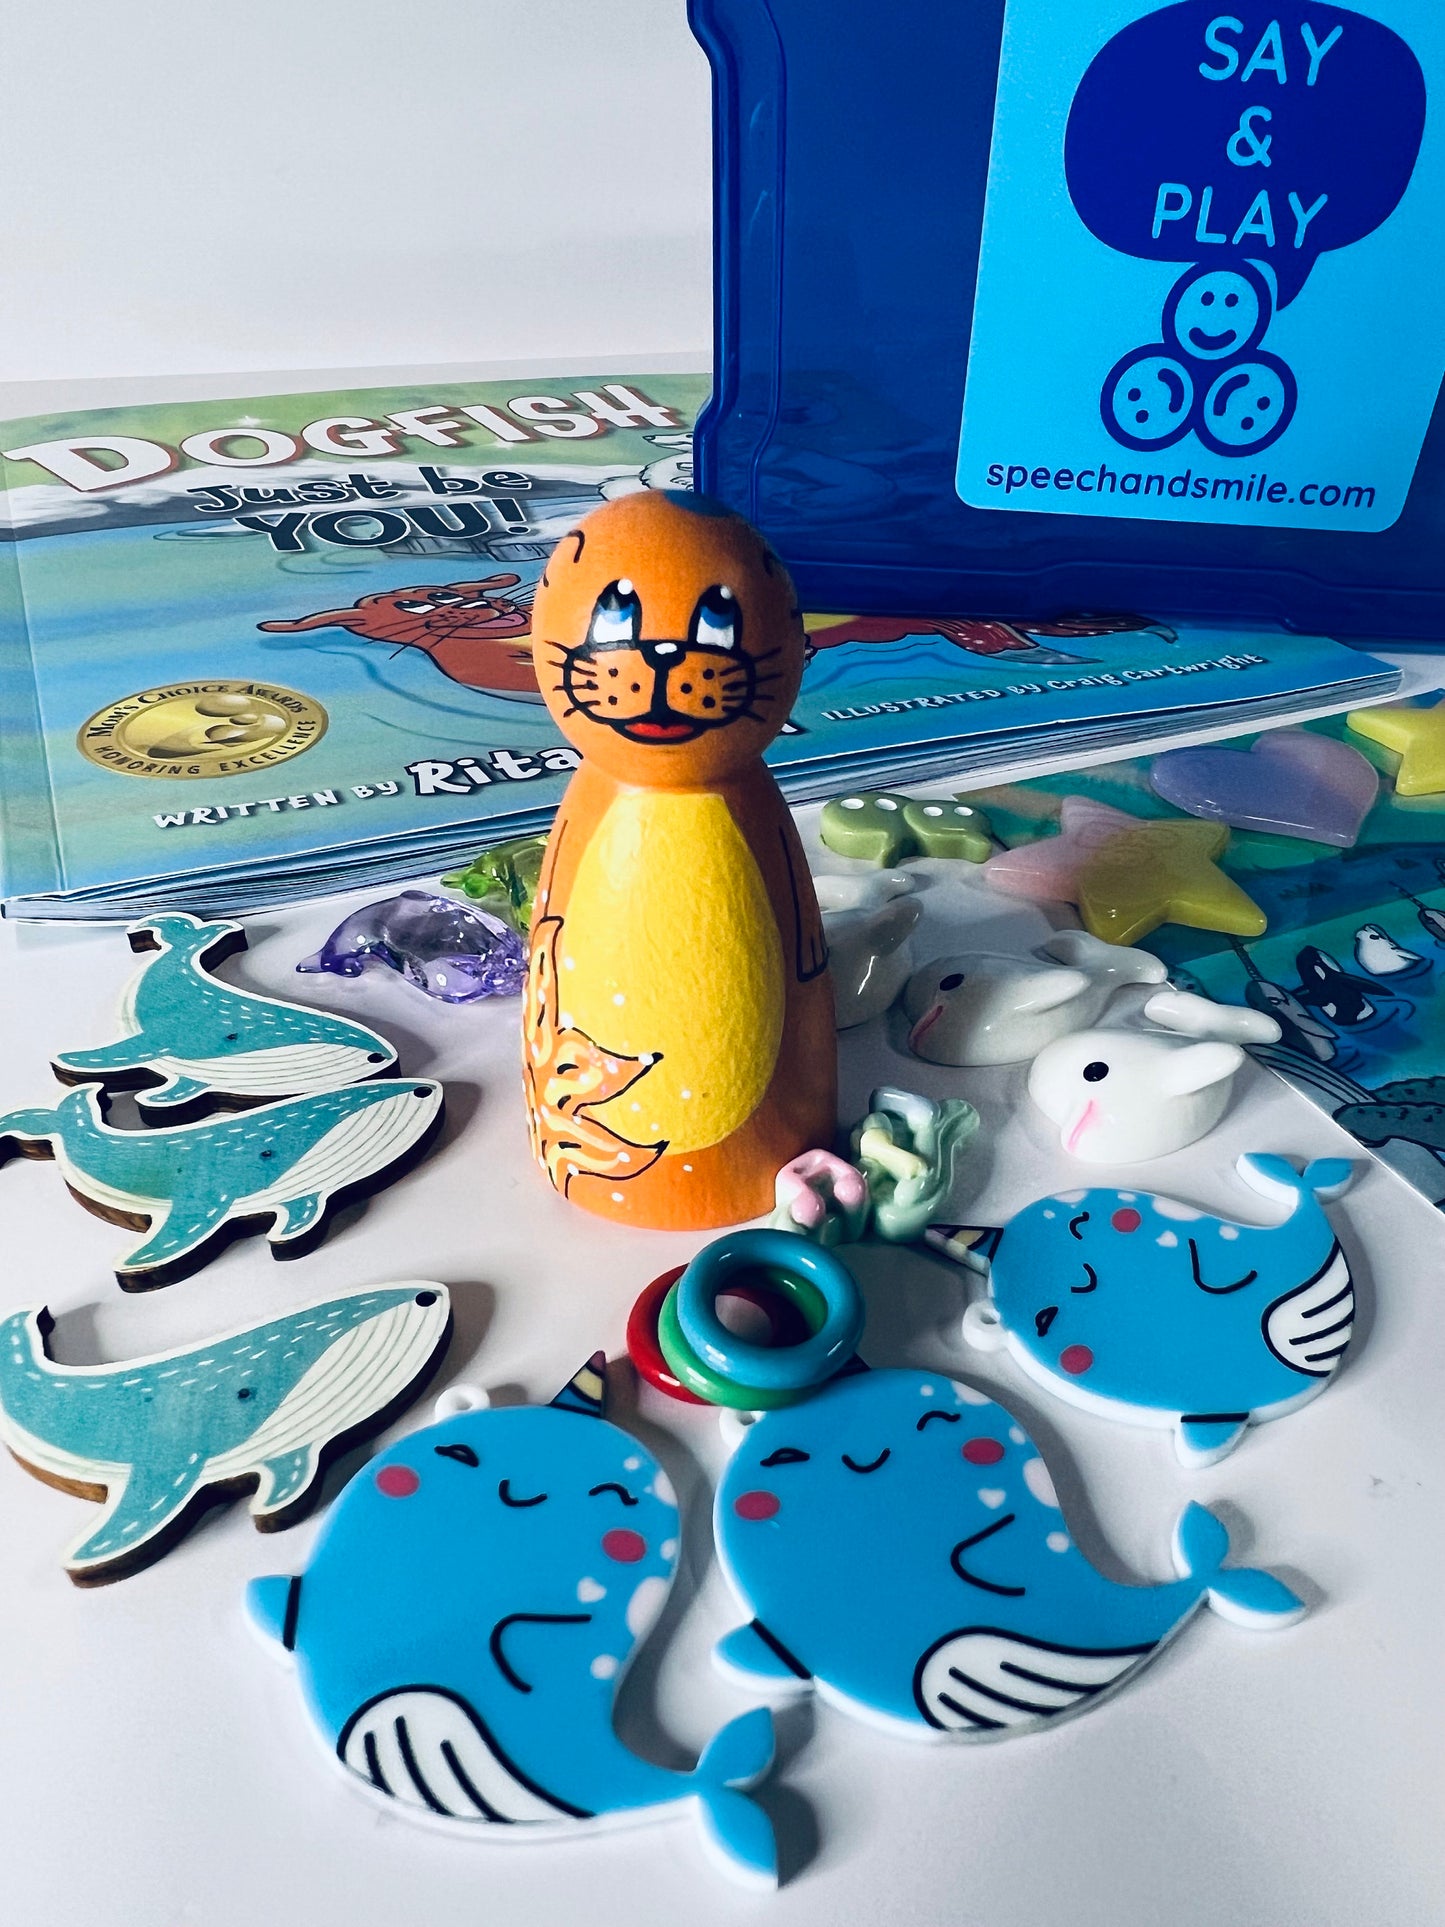 Kit d’histoire pour Dogfish Just be You Book - Arctic Ocean Book- Ocean Miniature Objects - Mini Objets pour l’orthophonie